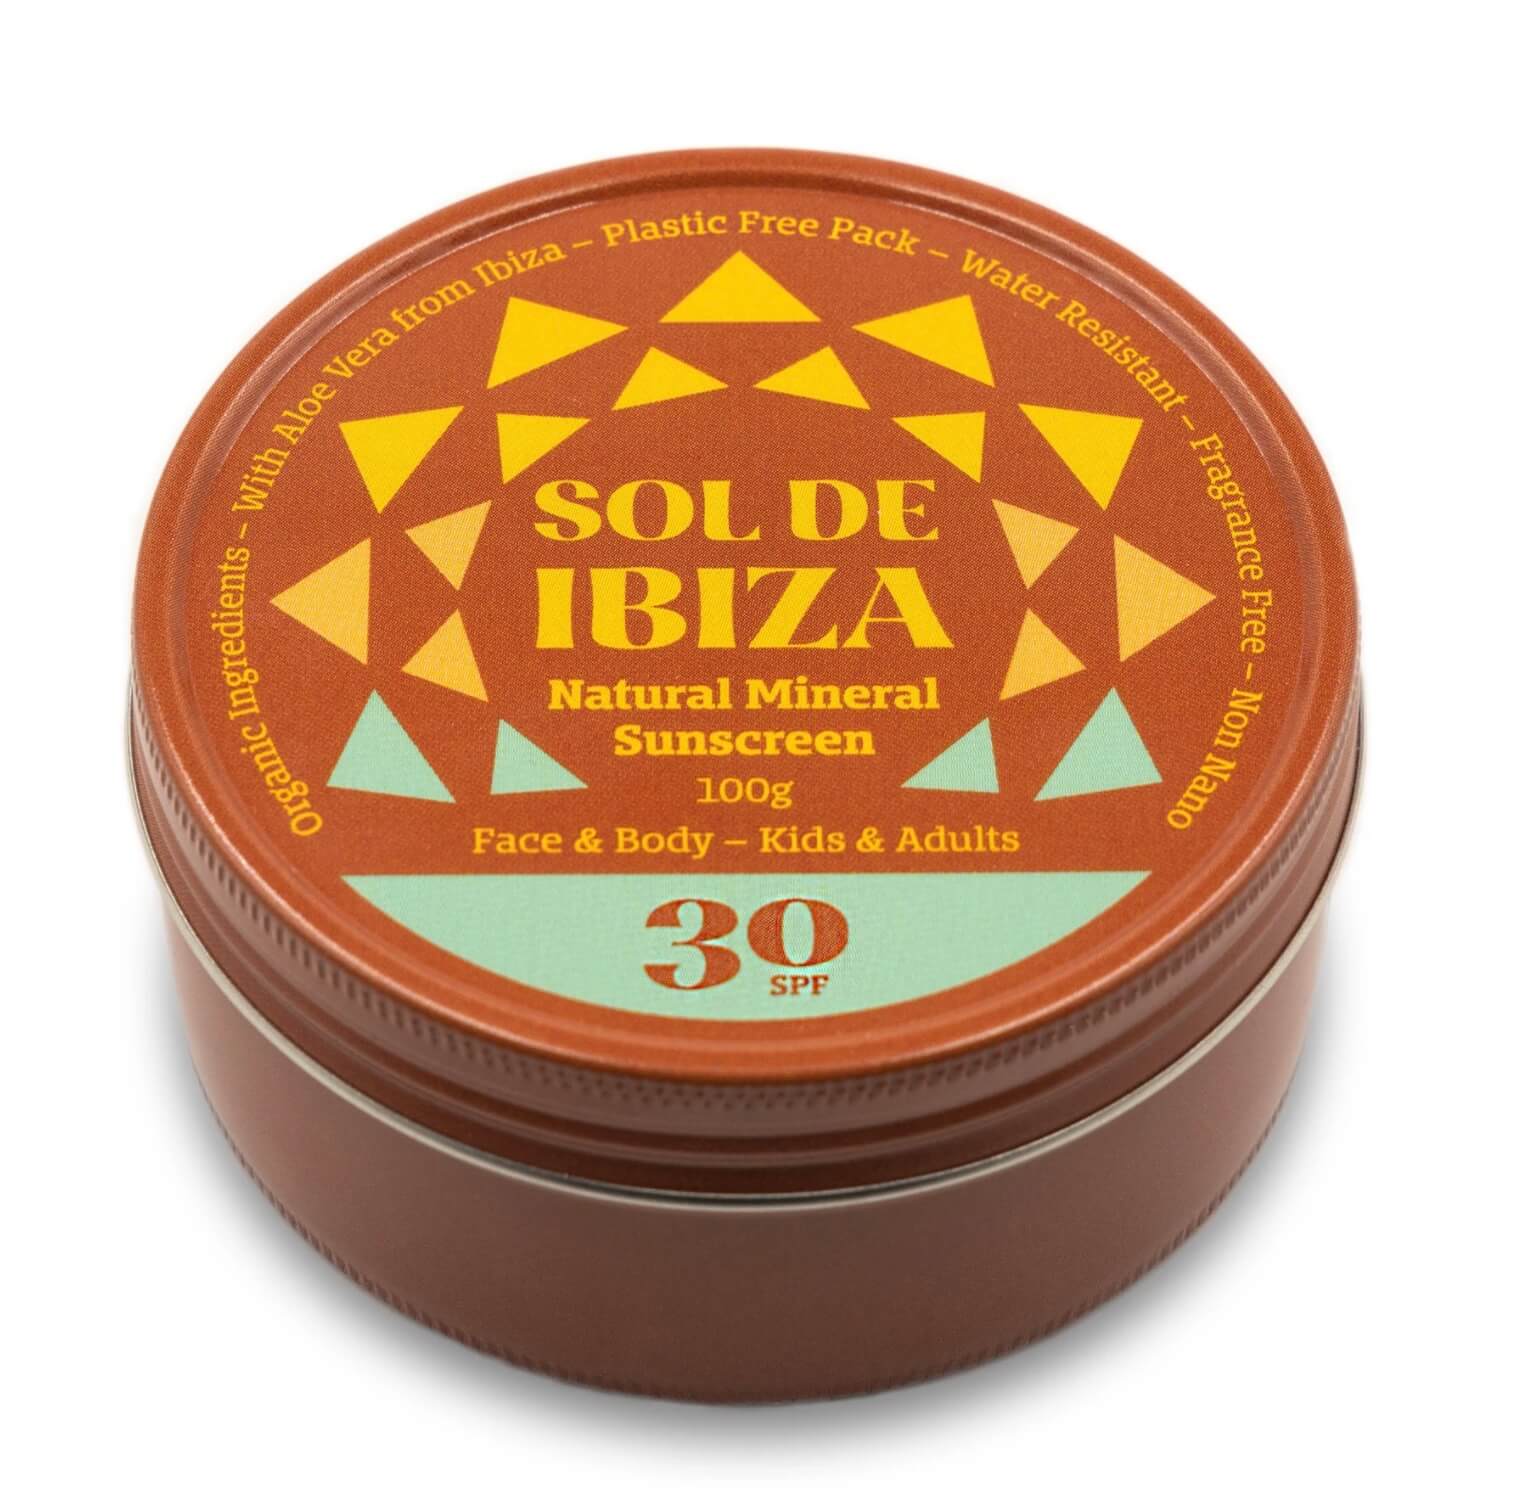 Natural Mineral Sunscreen - SPF 30 - Plastic Free Amsterdam